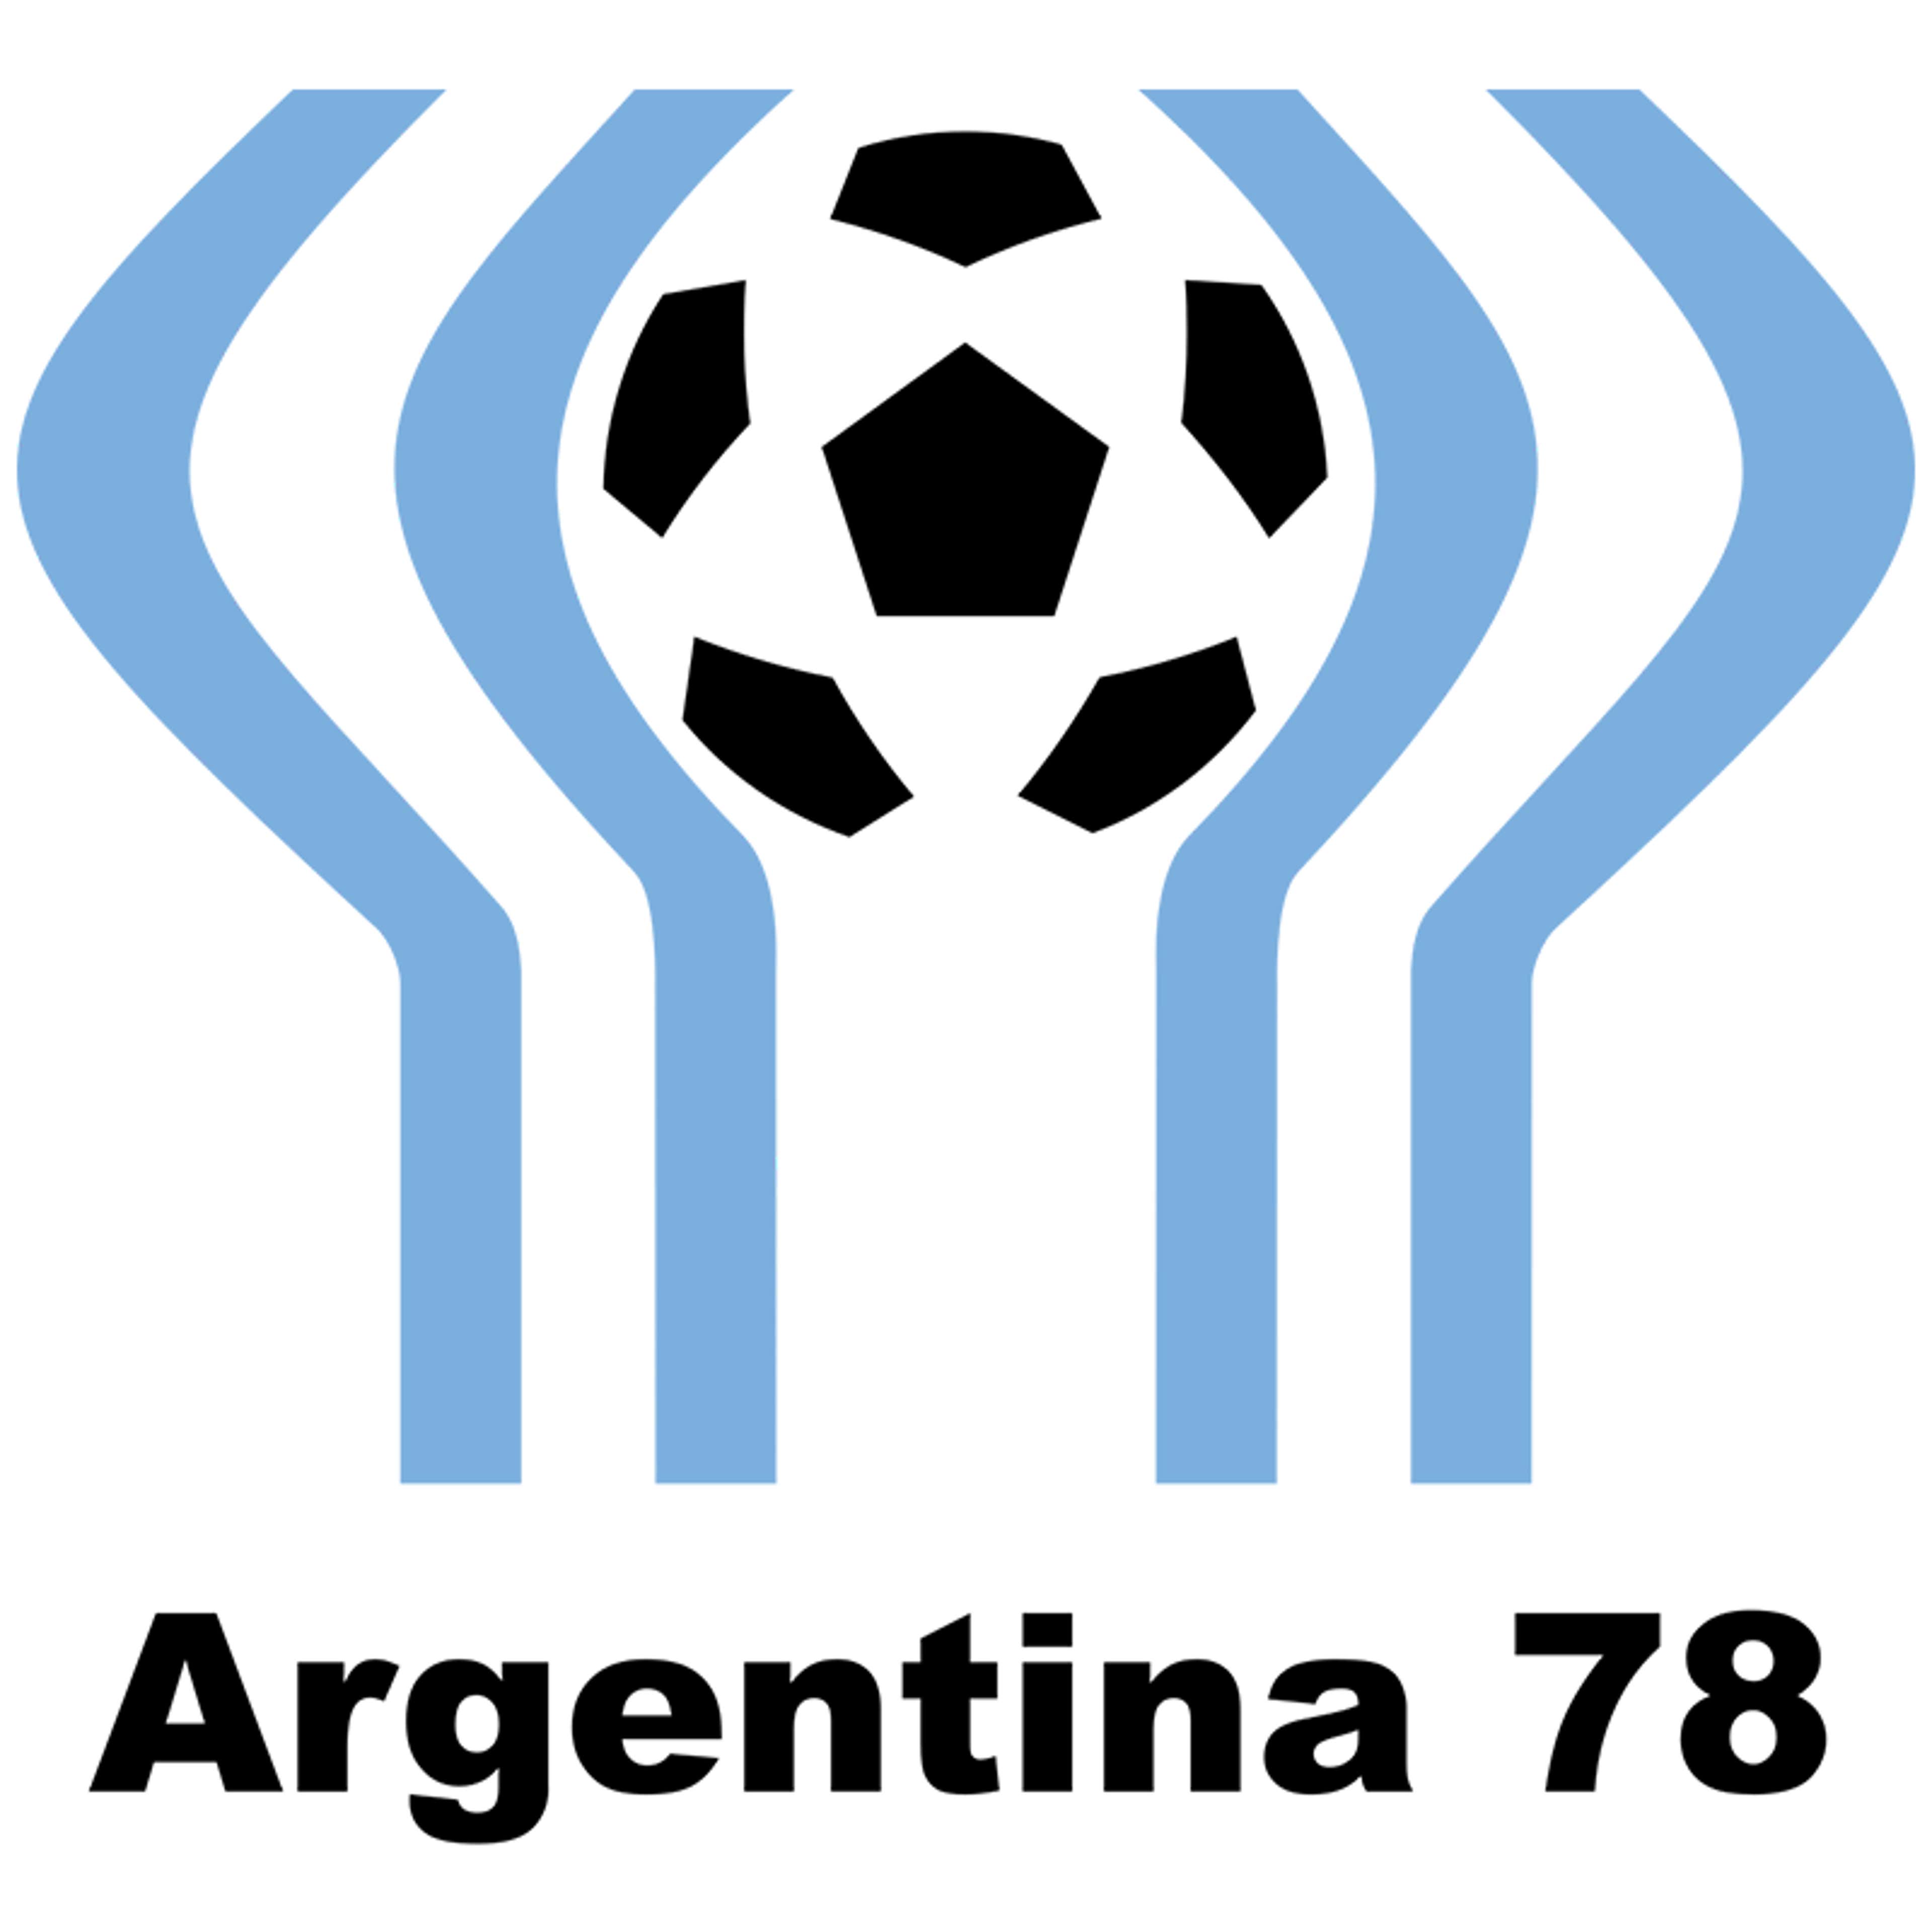 FIFA World Cup logos